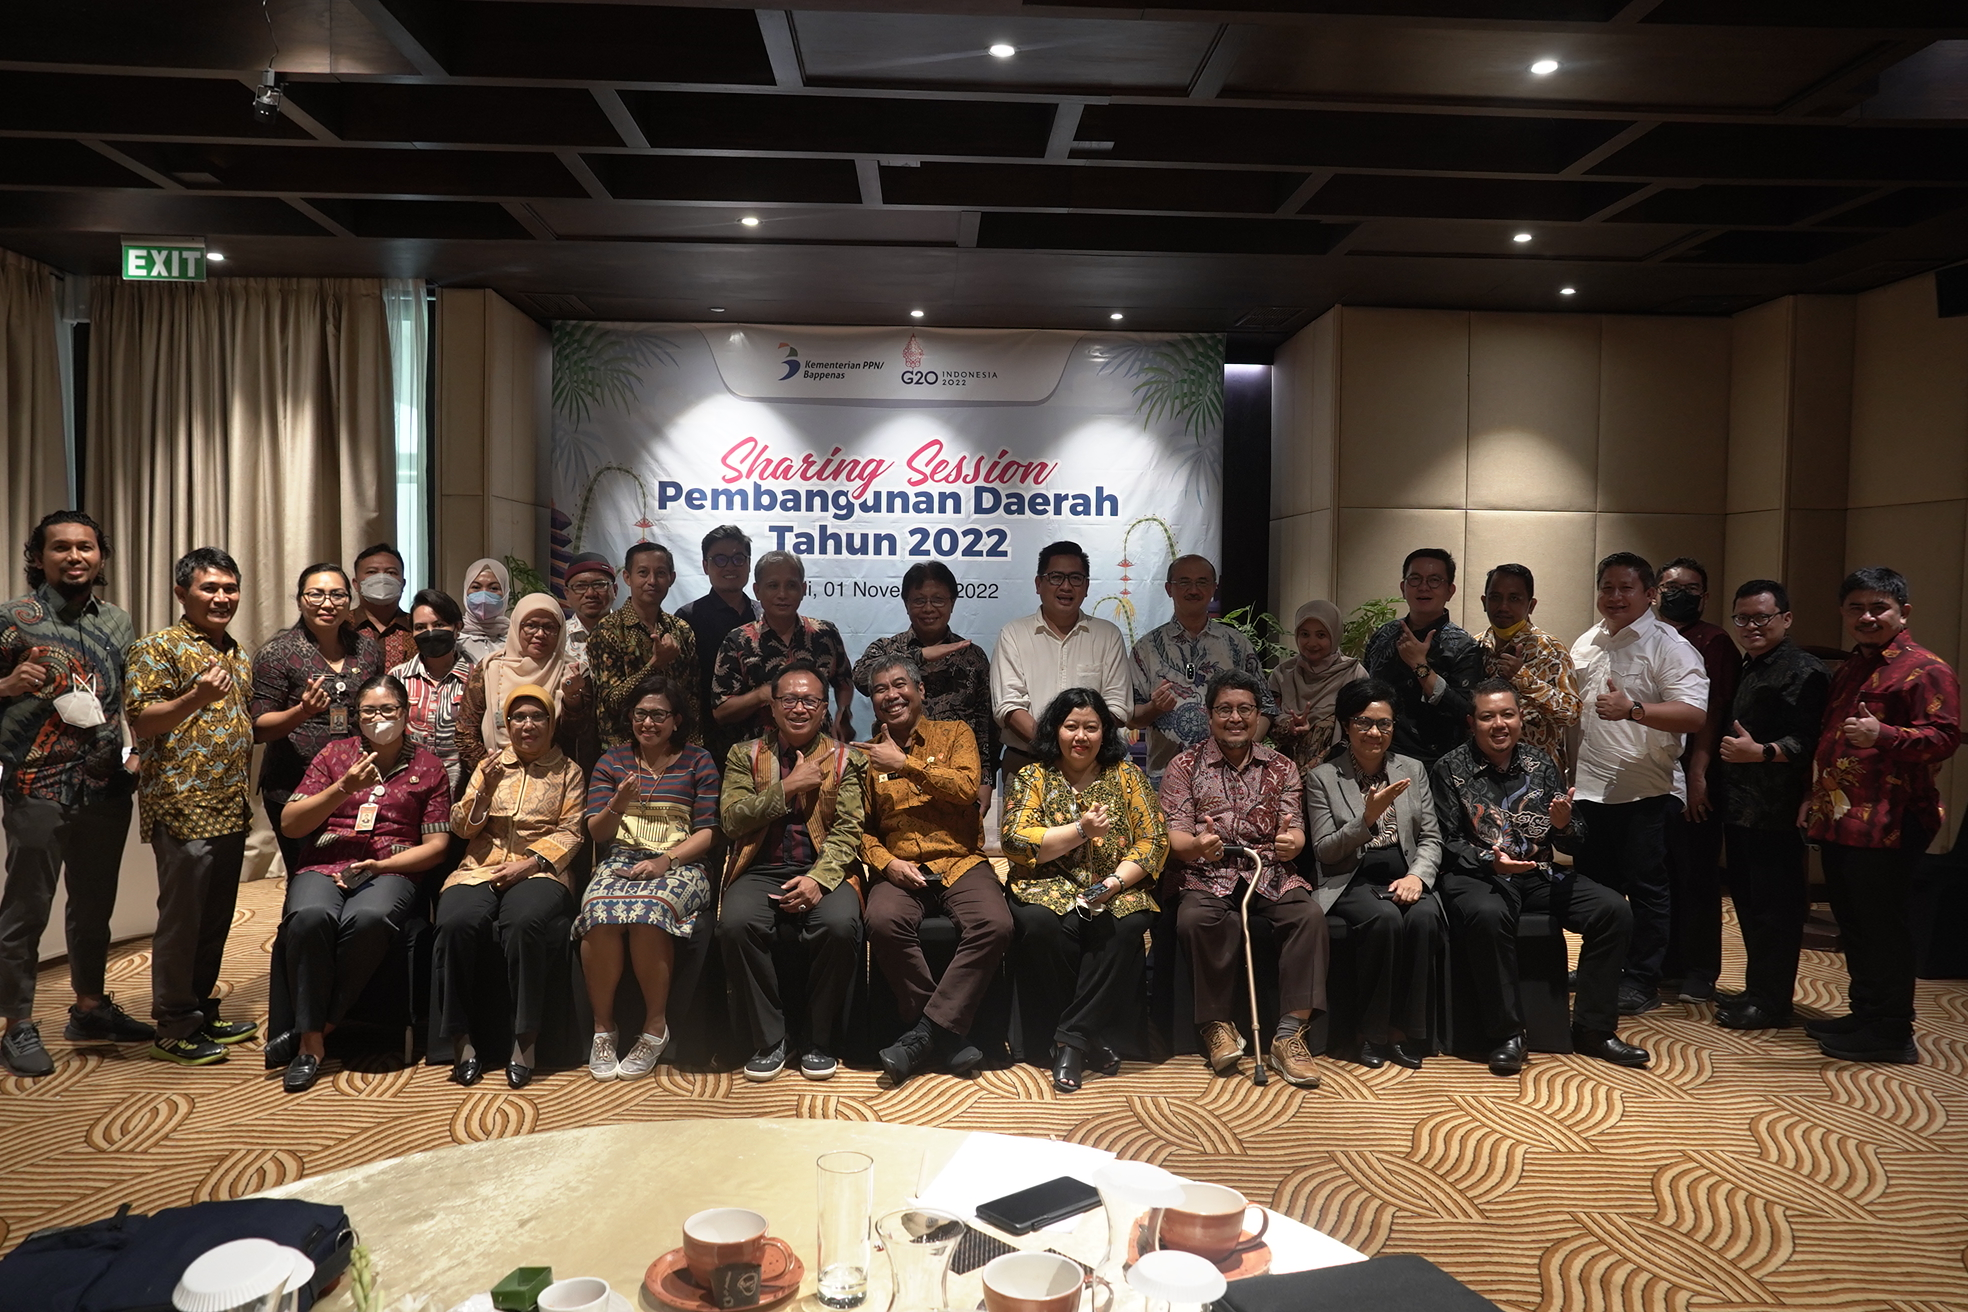 Dalam Rangka Berbagi Pengetahuan Wilayah Tengah dan Timur, Bappenas Selenggarakan Sharing Session Pembangunan Daerah Tahun 2022